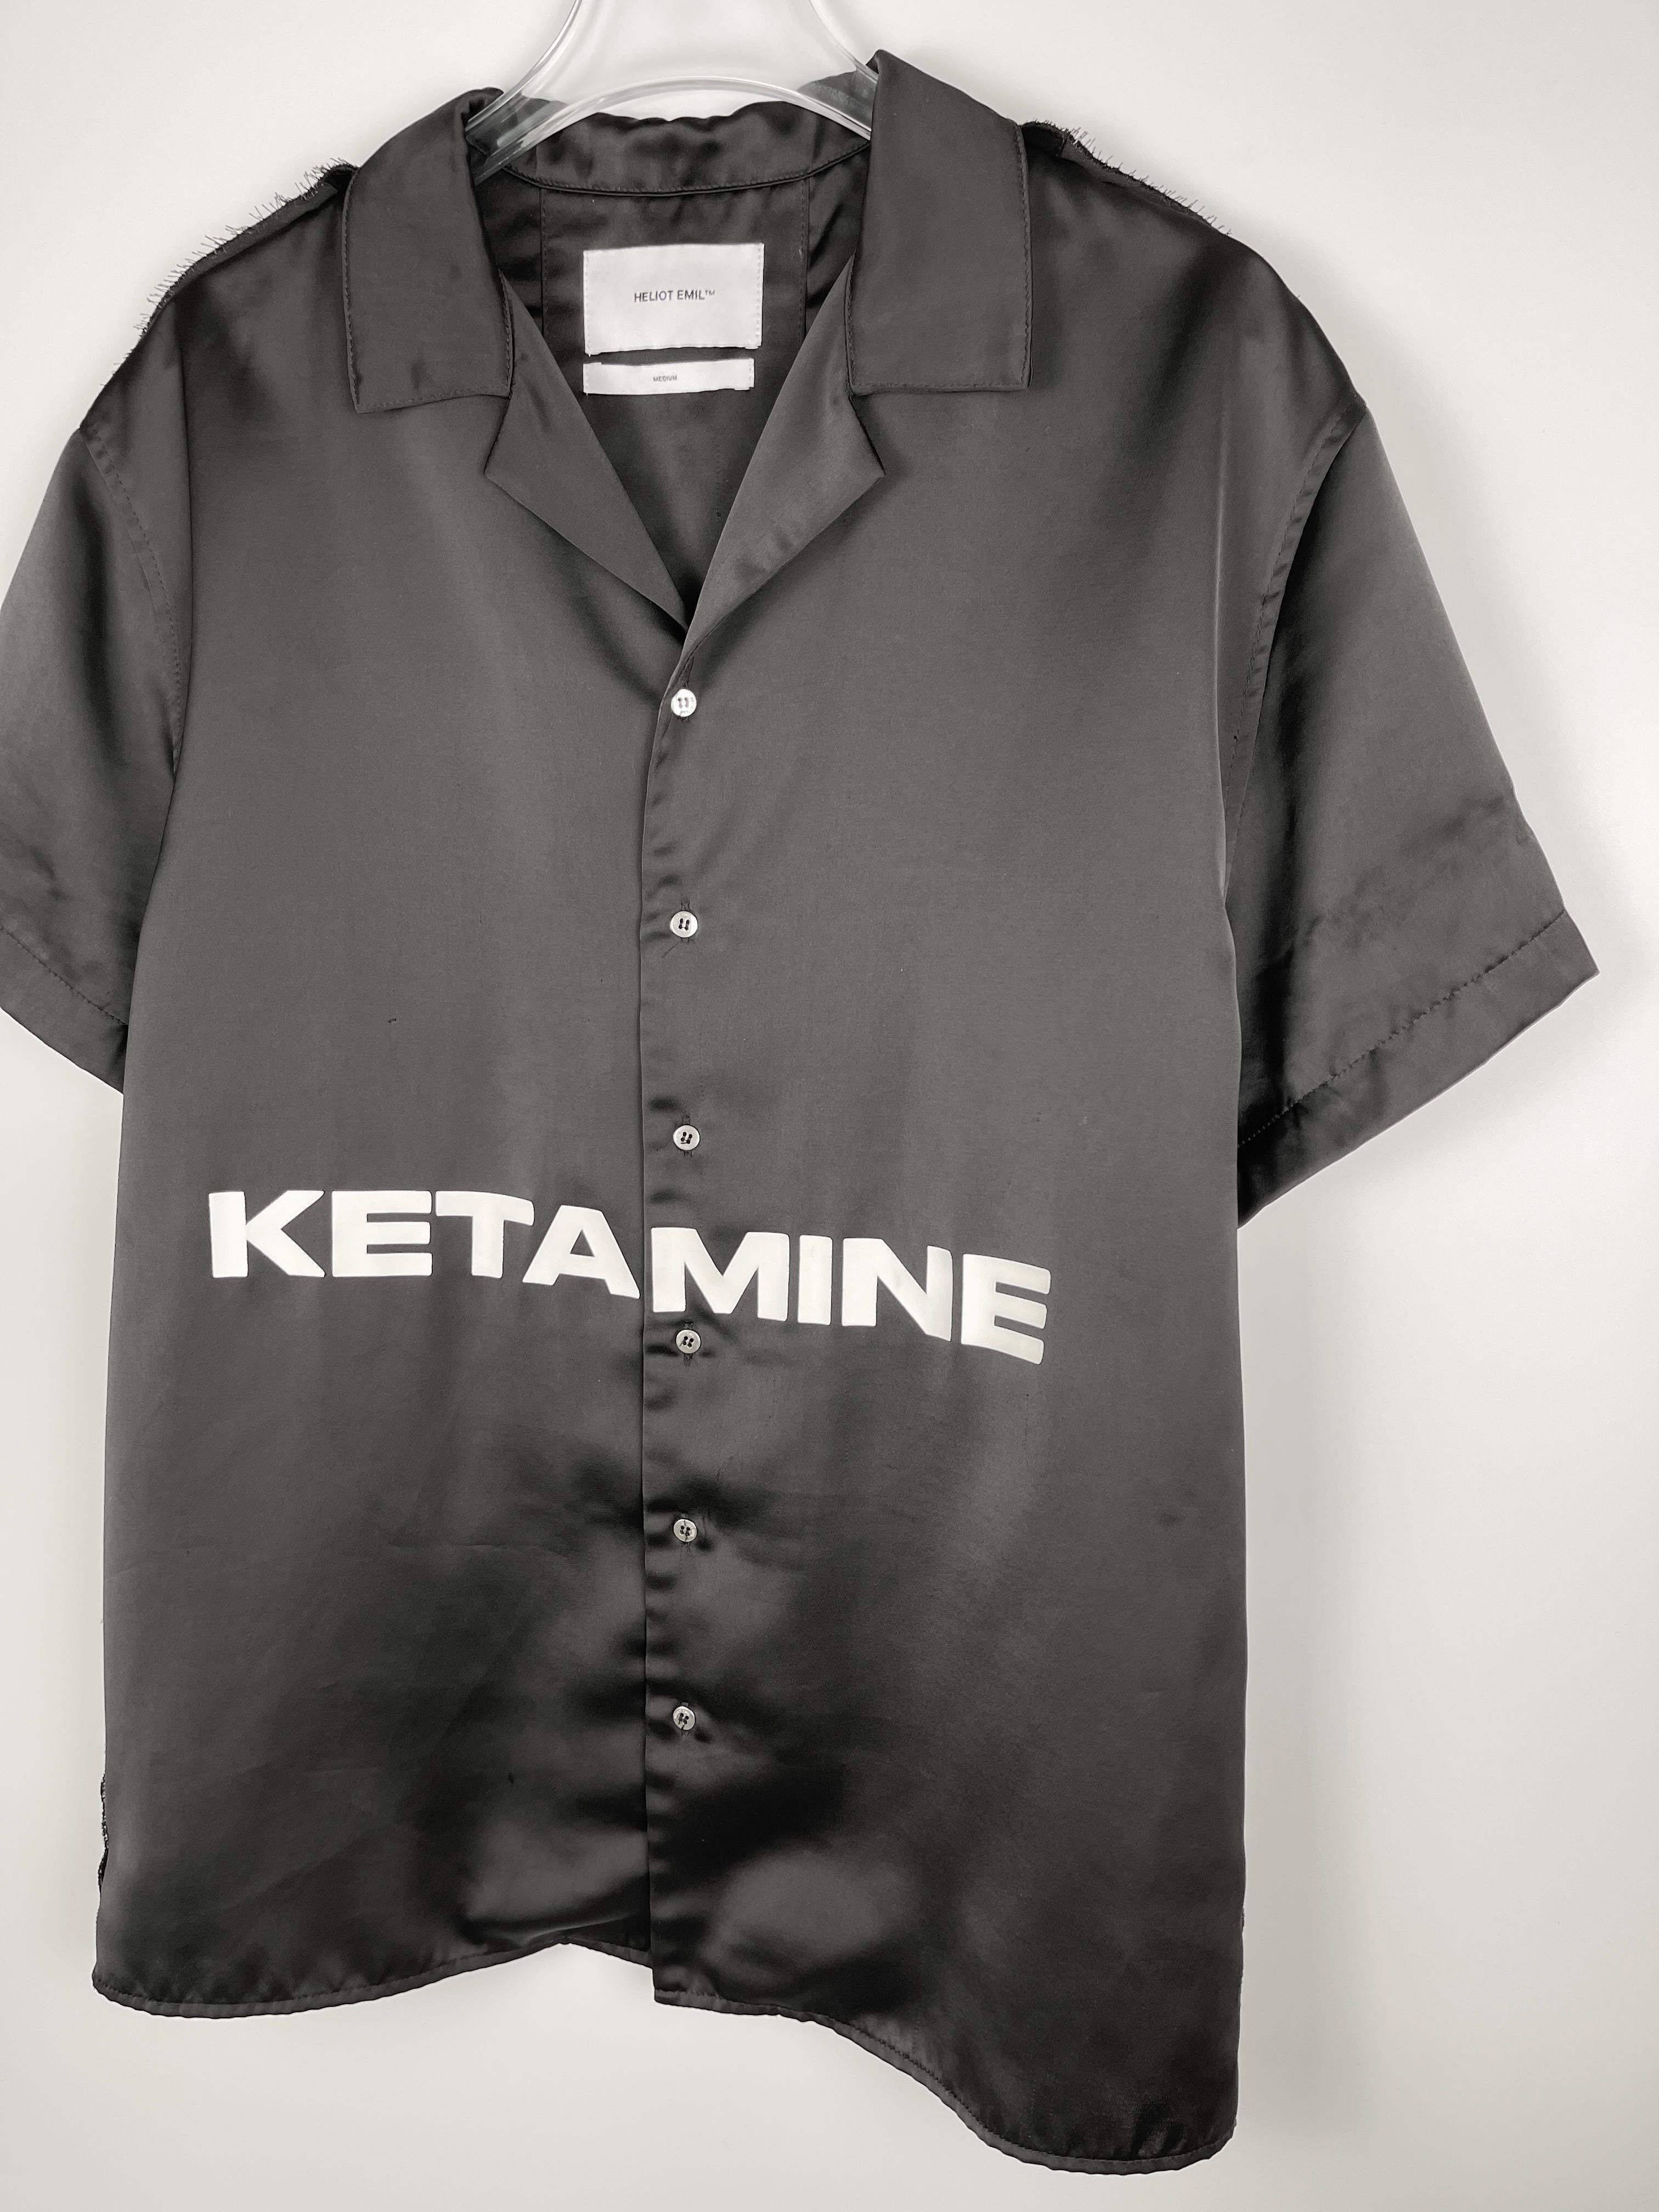 Heliot Emil 2018 Stapled Ketamine Shirt For Sale 5